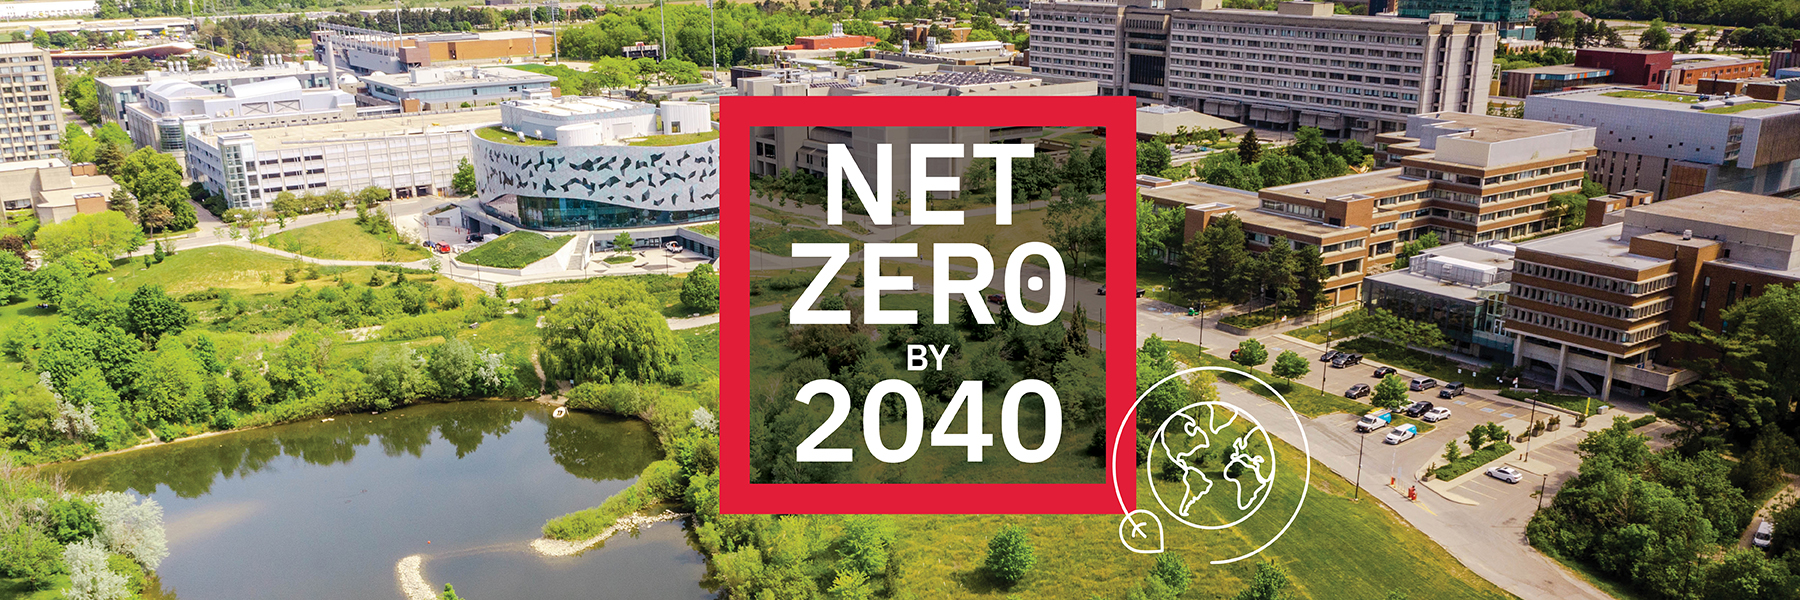 Net Zero 2040 Sustainability Announcement York University